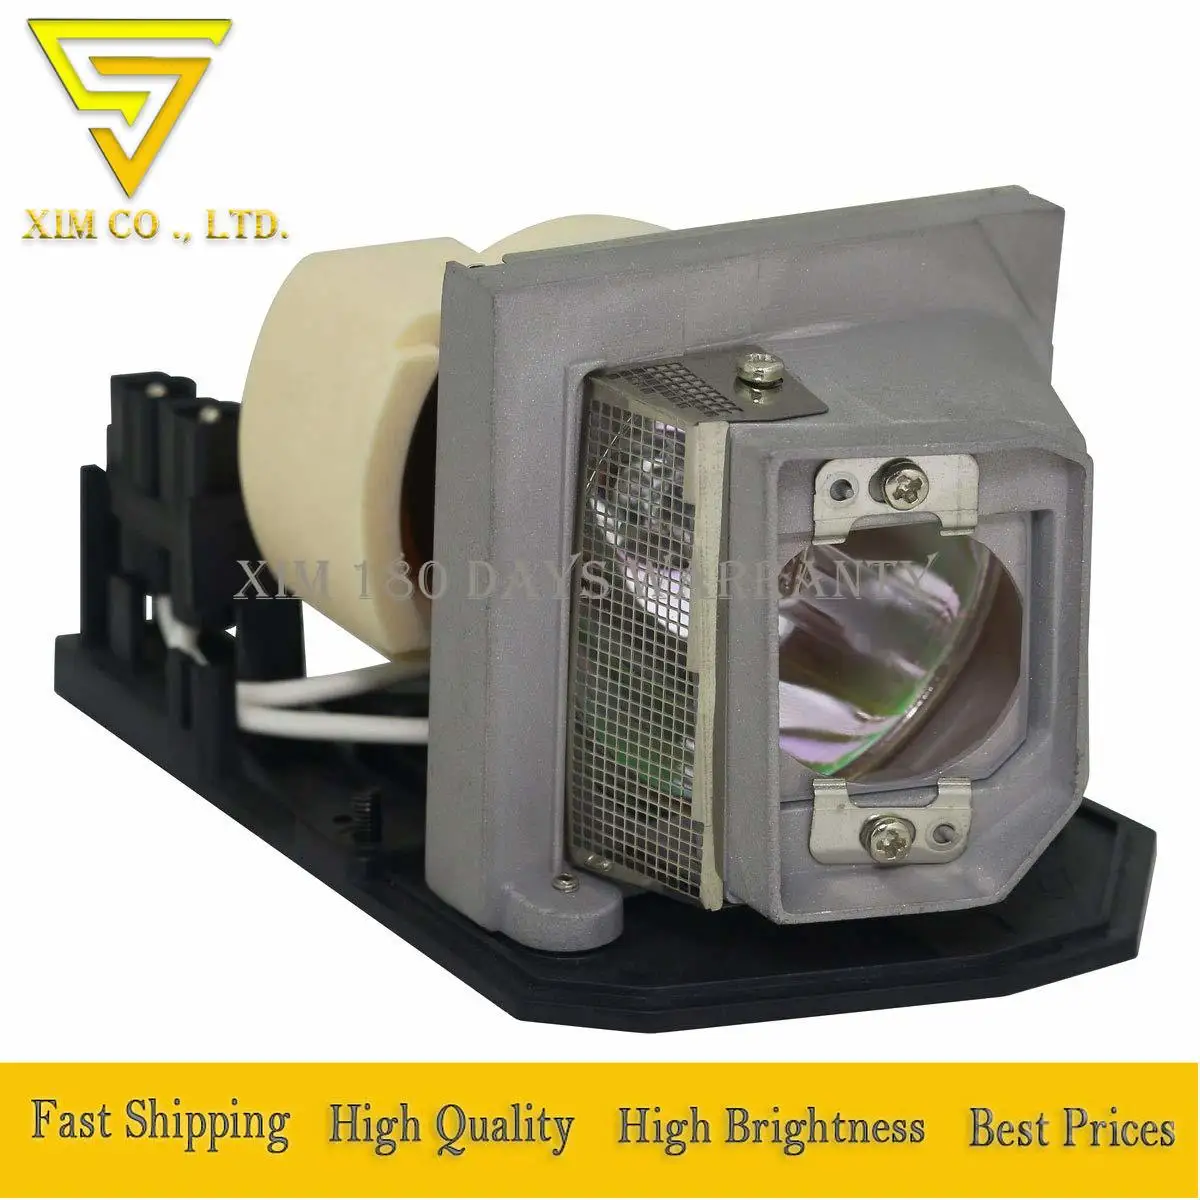 EC. K0700.001 EC. K0100.001 Профессиональный проектор лампа для ACER H5360 H5360BD V700 X110 X1161 X1161-3D X1161A X1161N X1261 X1261N